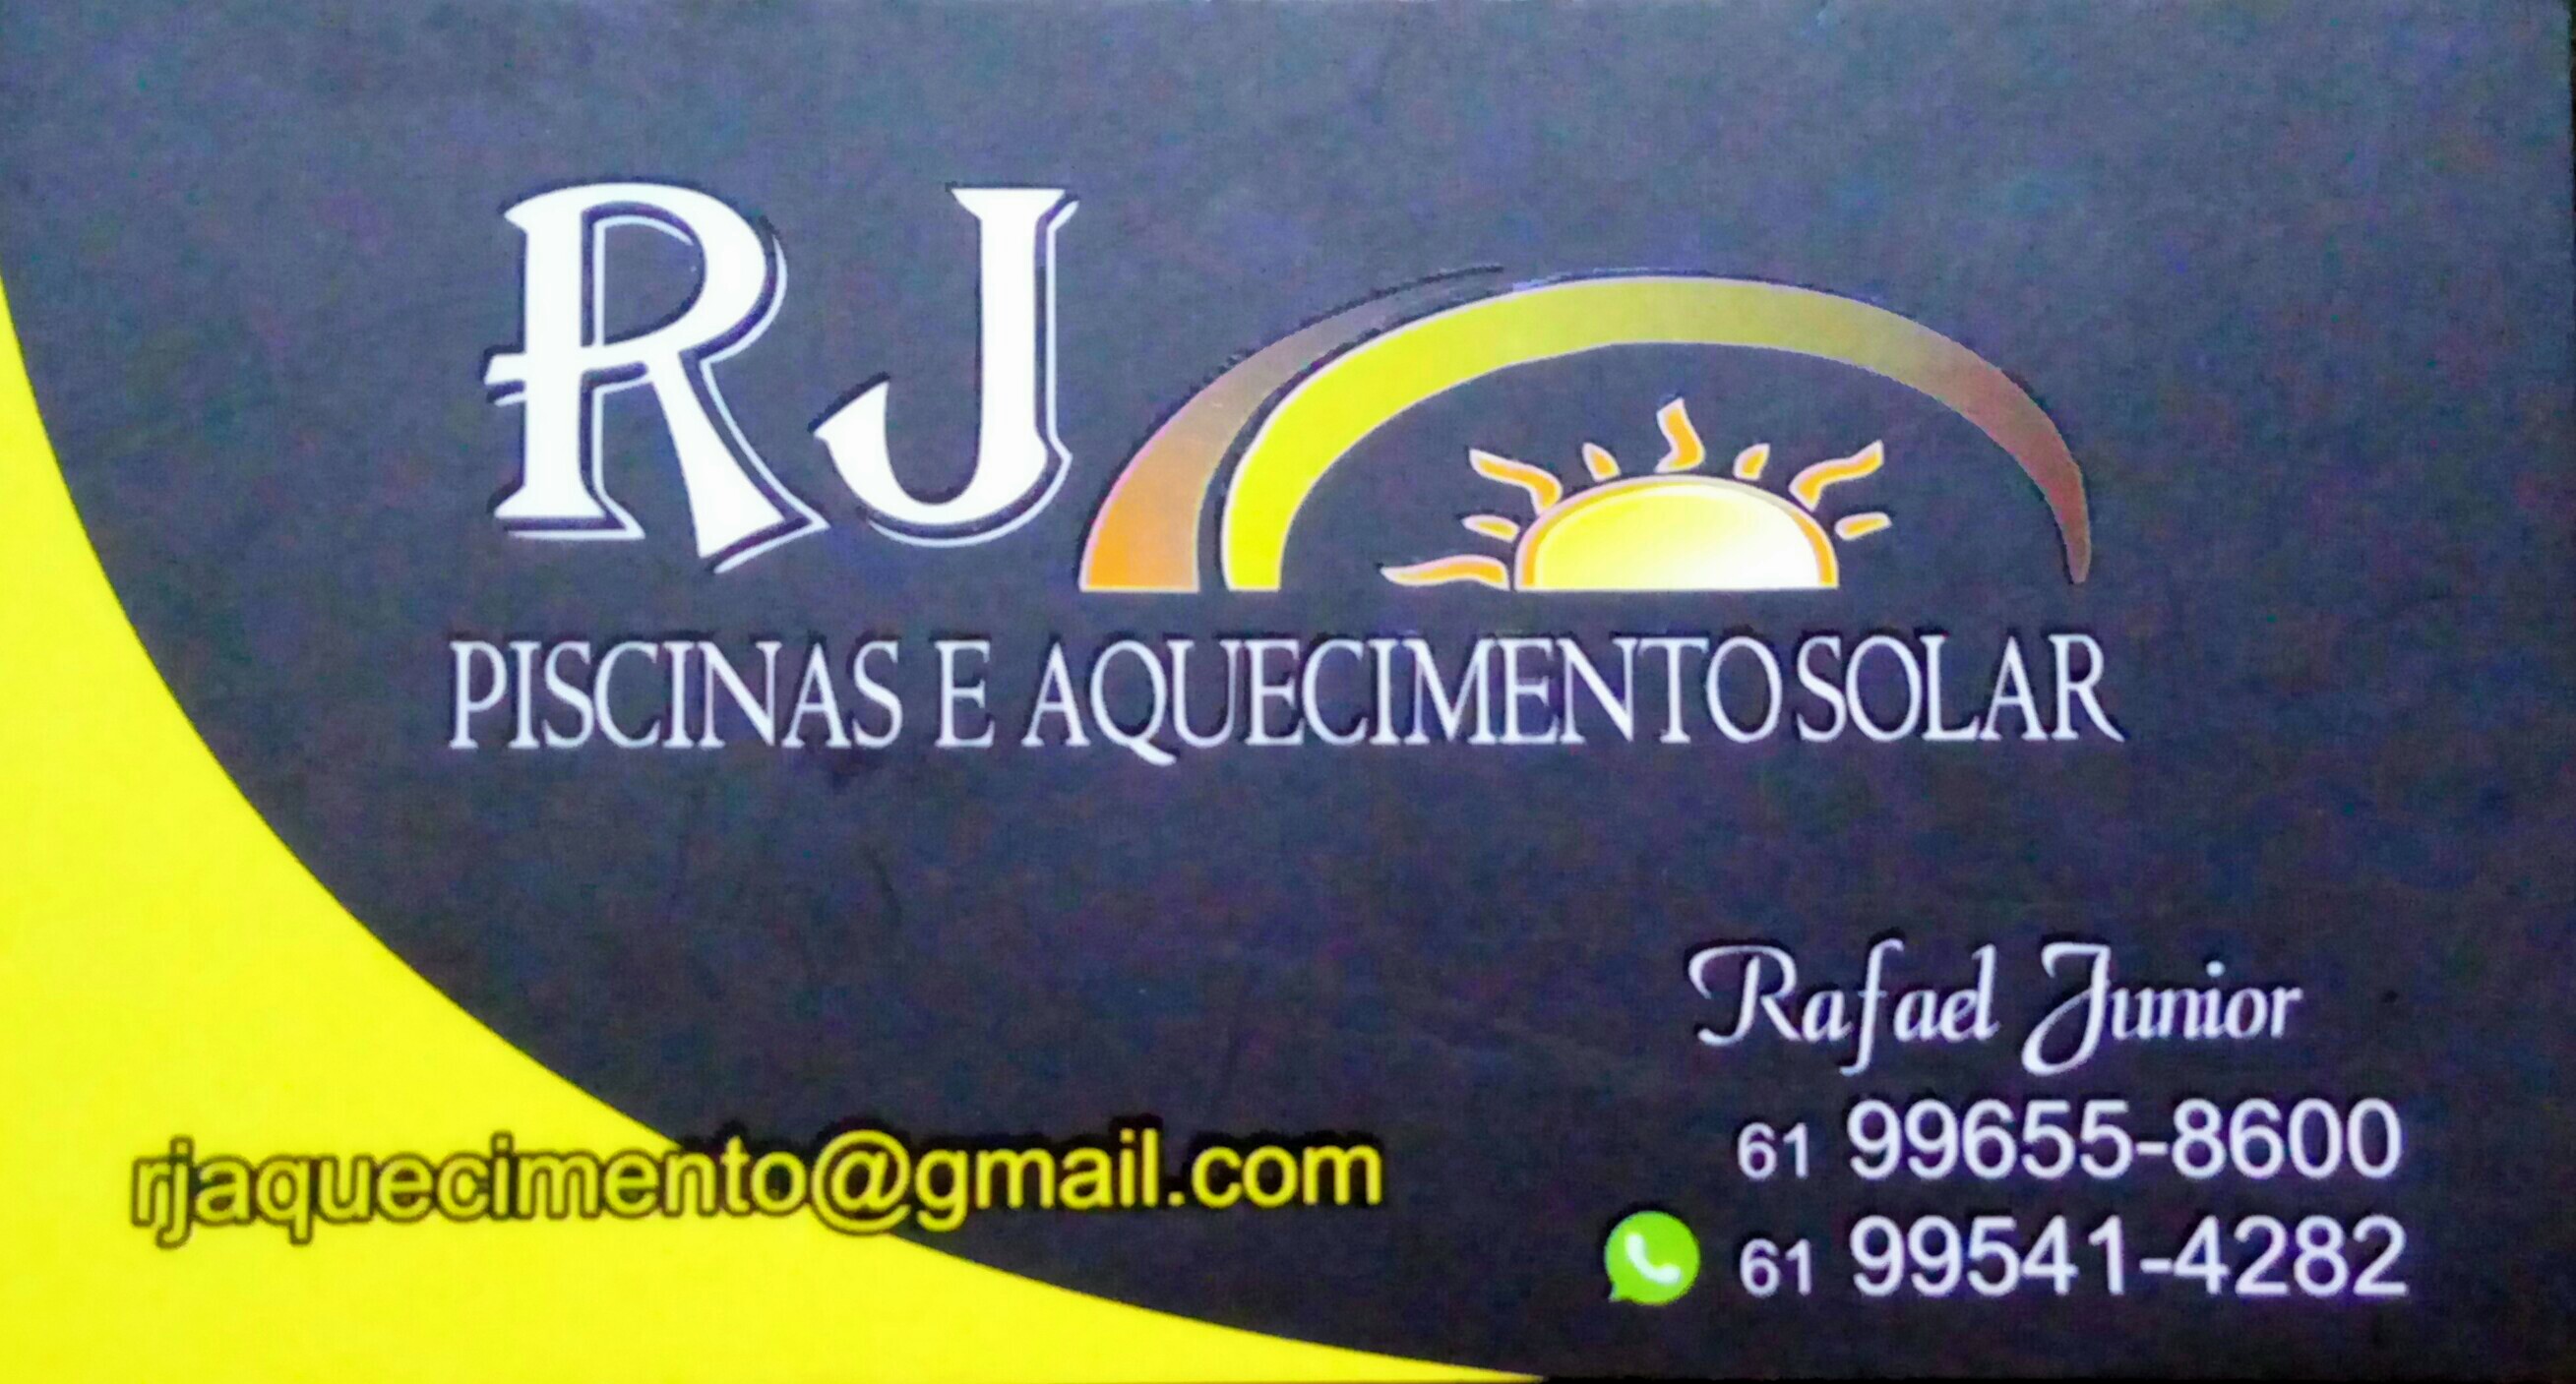 RJ AQUECIMENTO SOLAR PISCINA - Elétrica - Brasília, DF